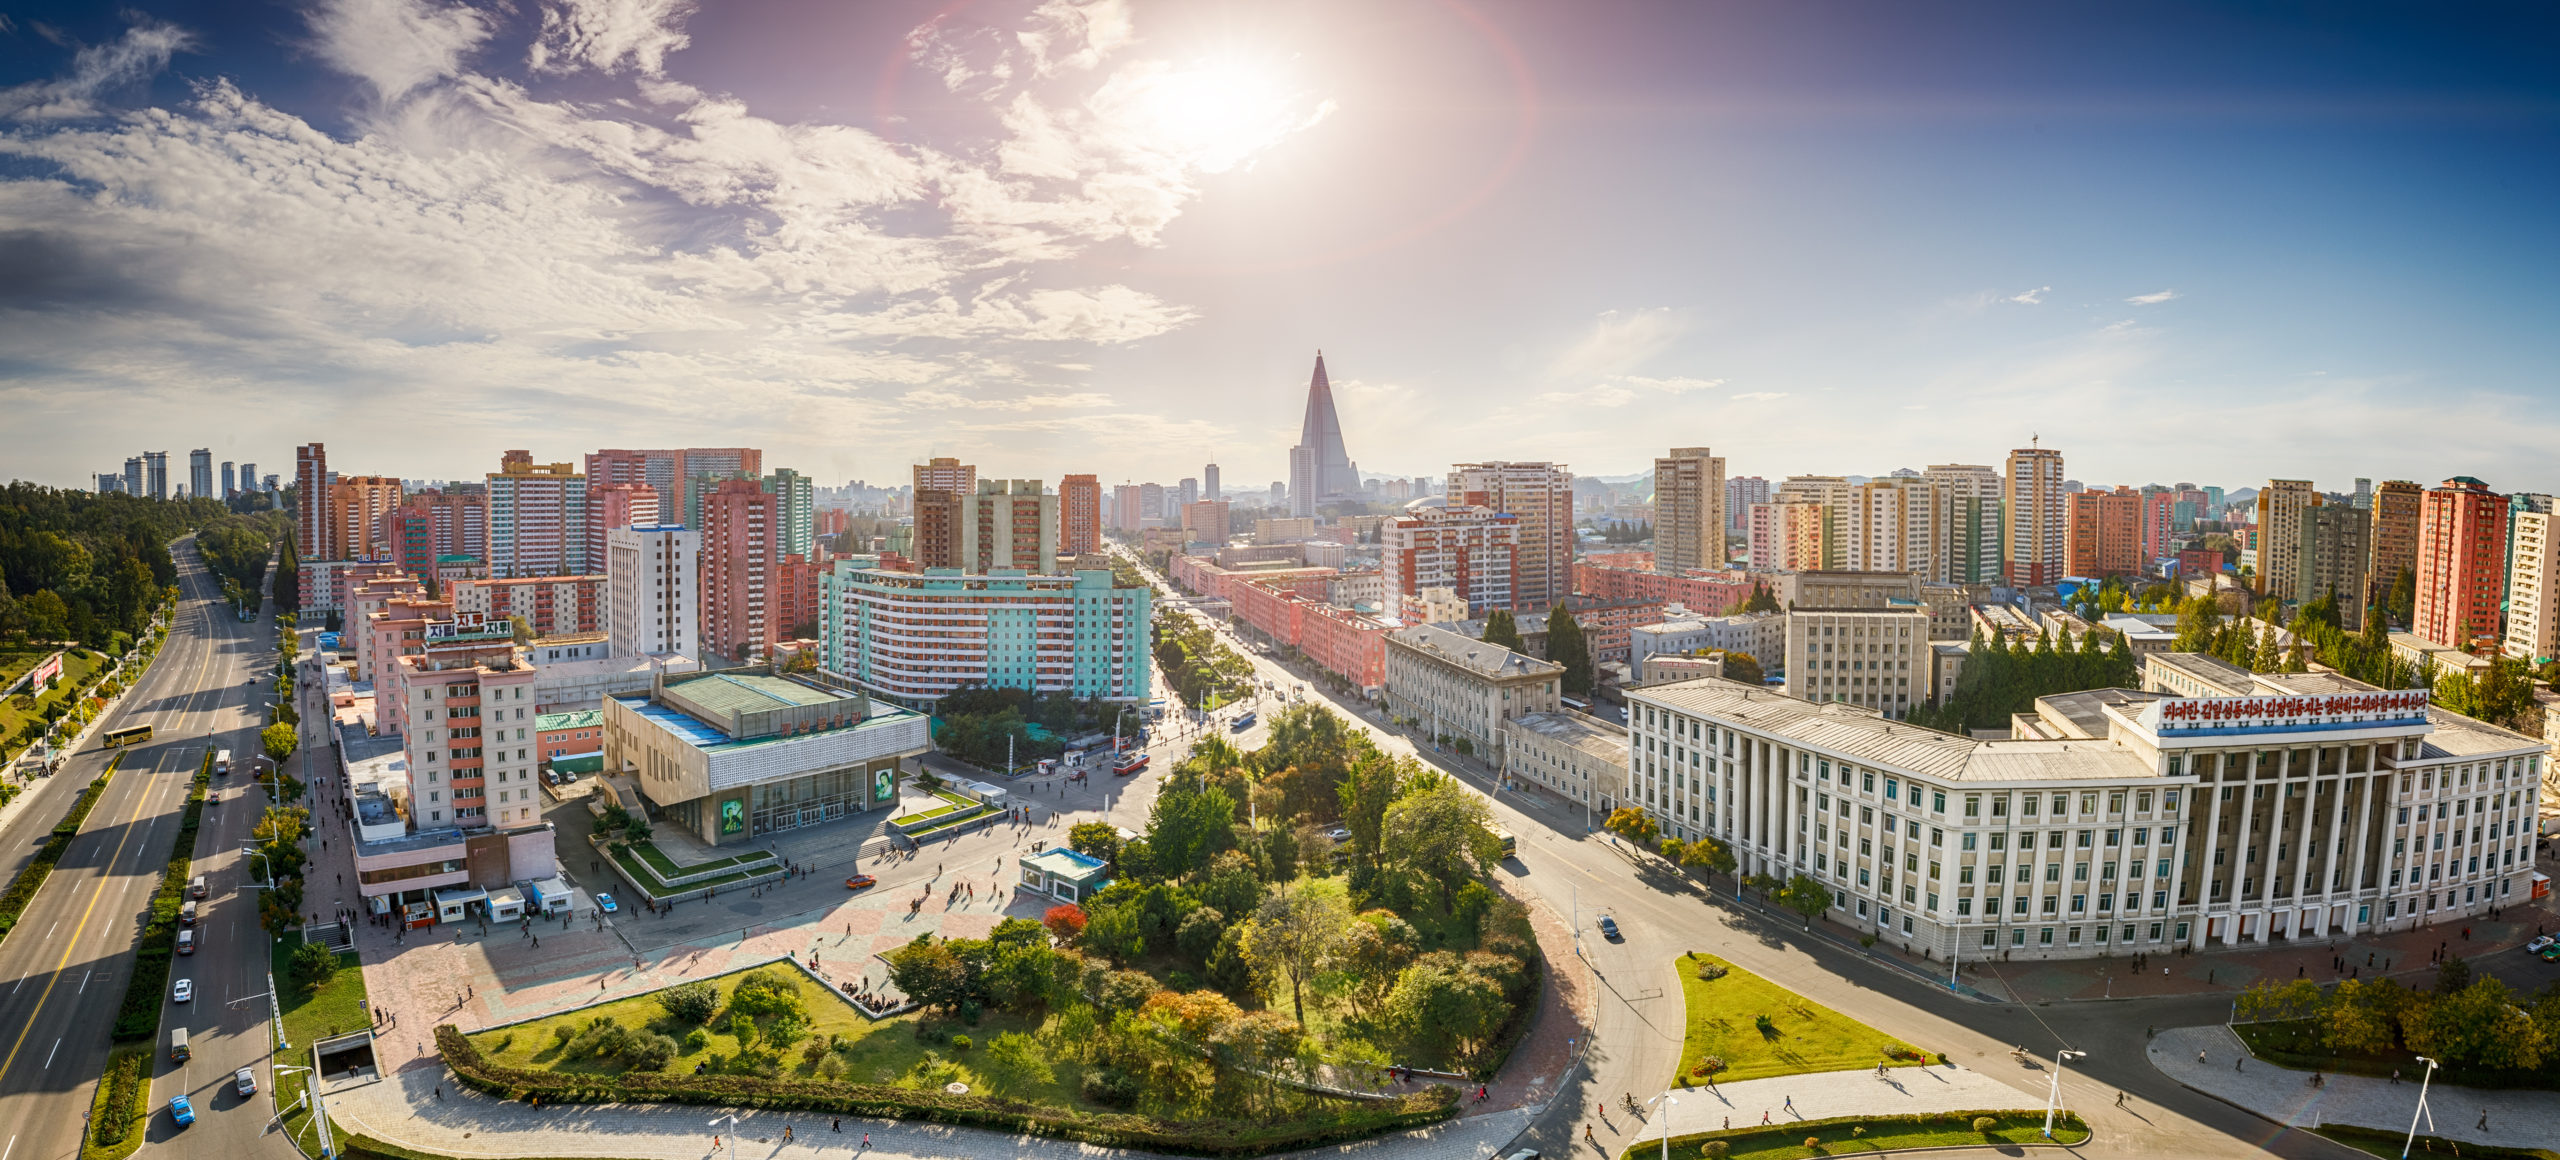 North Korea [Shutterstock]